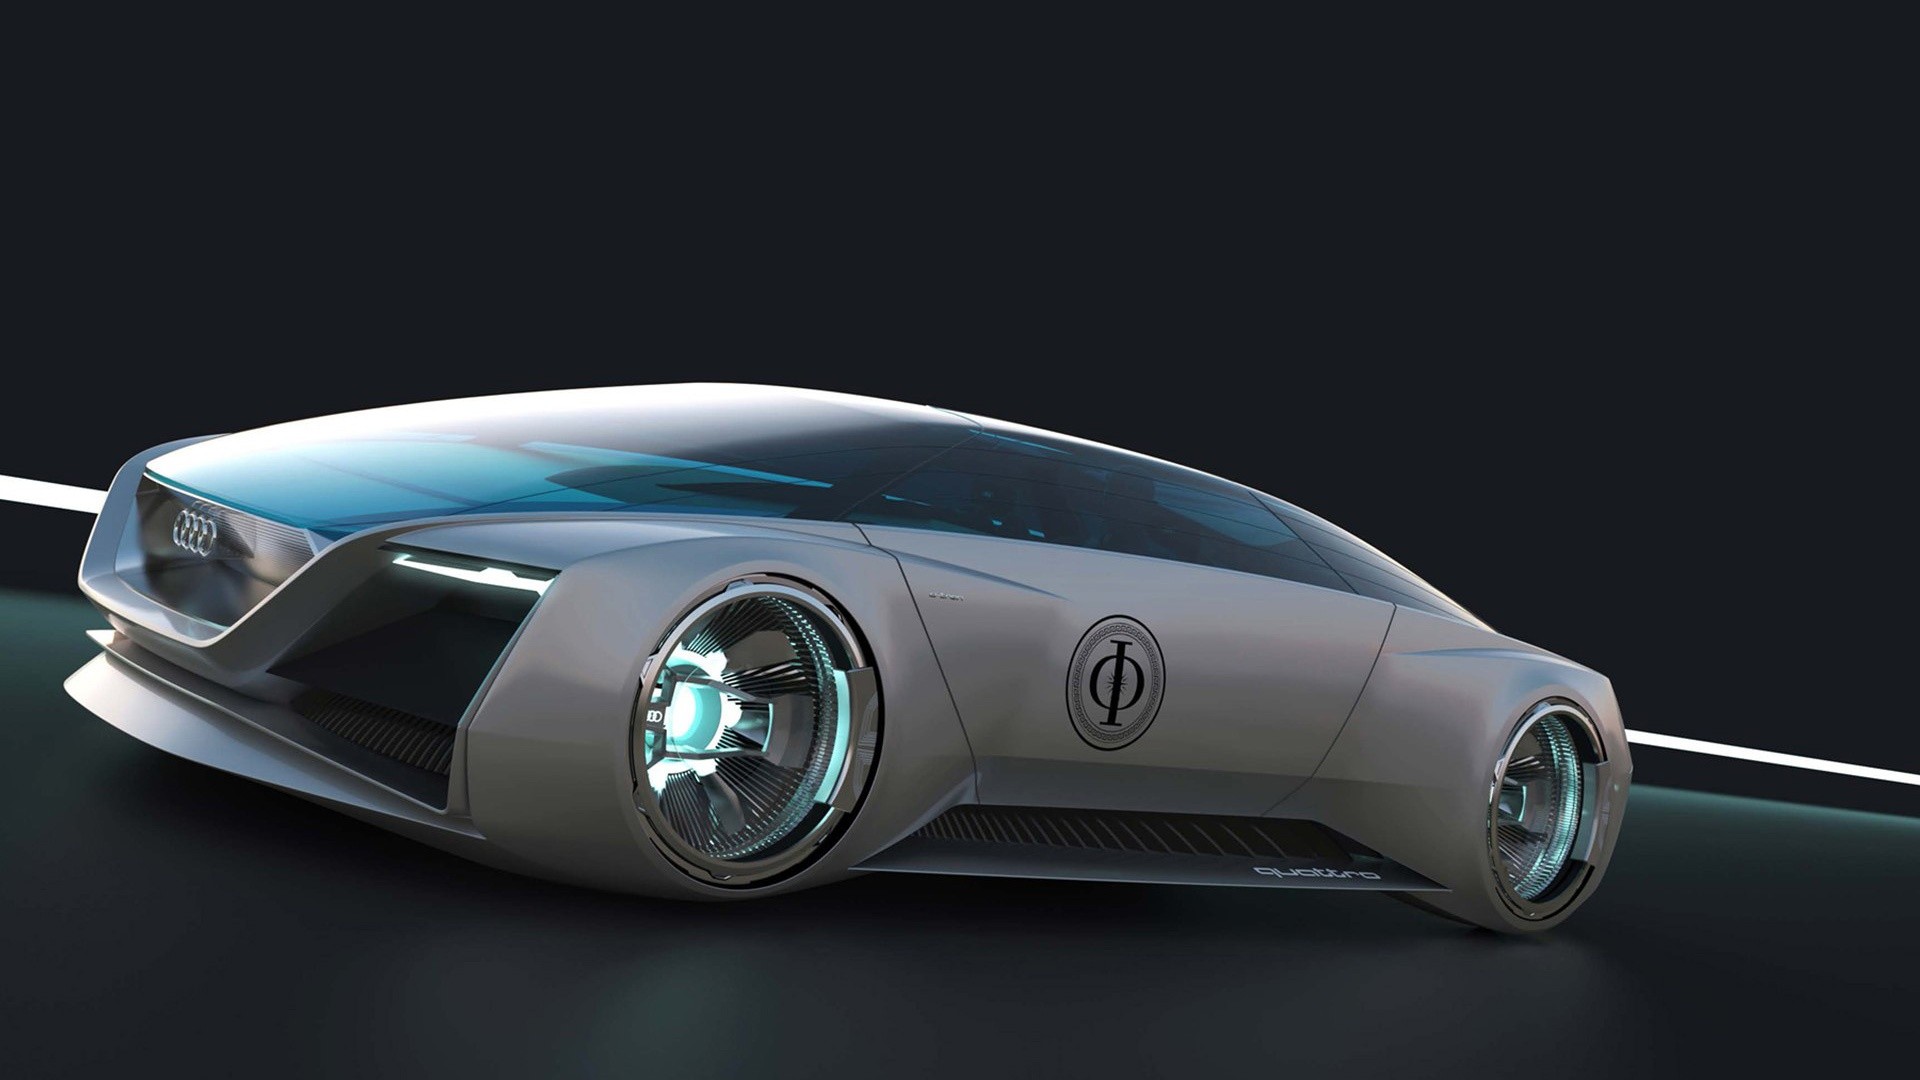 General 1920x1080 Audi vehicle futuristic concept cars CGI digital art car